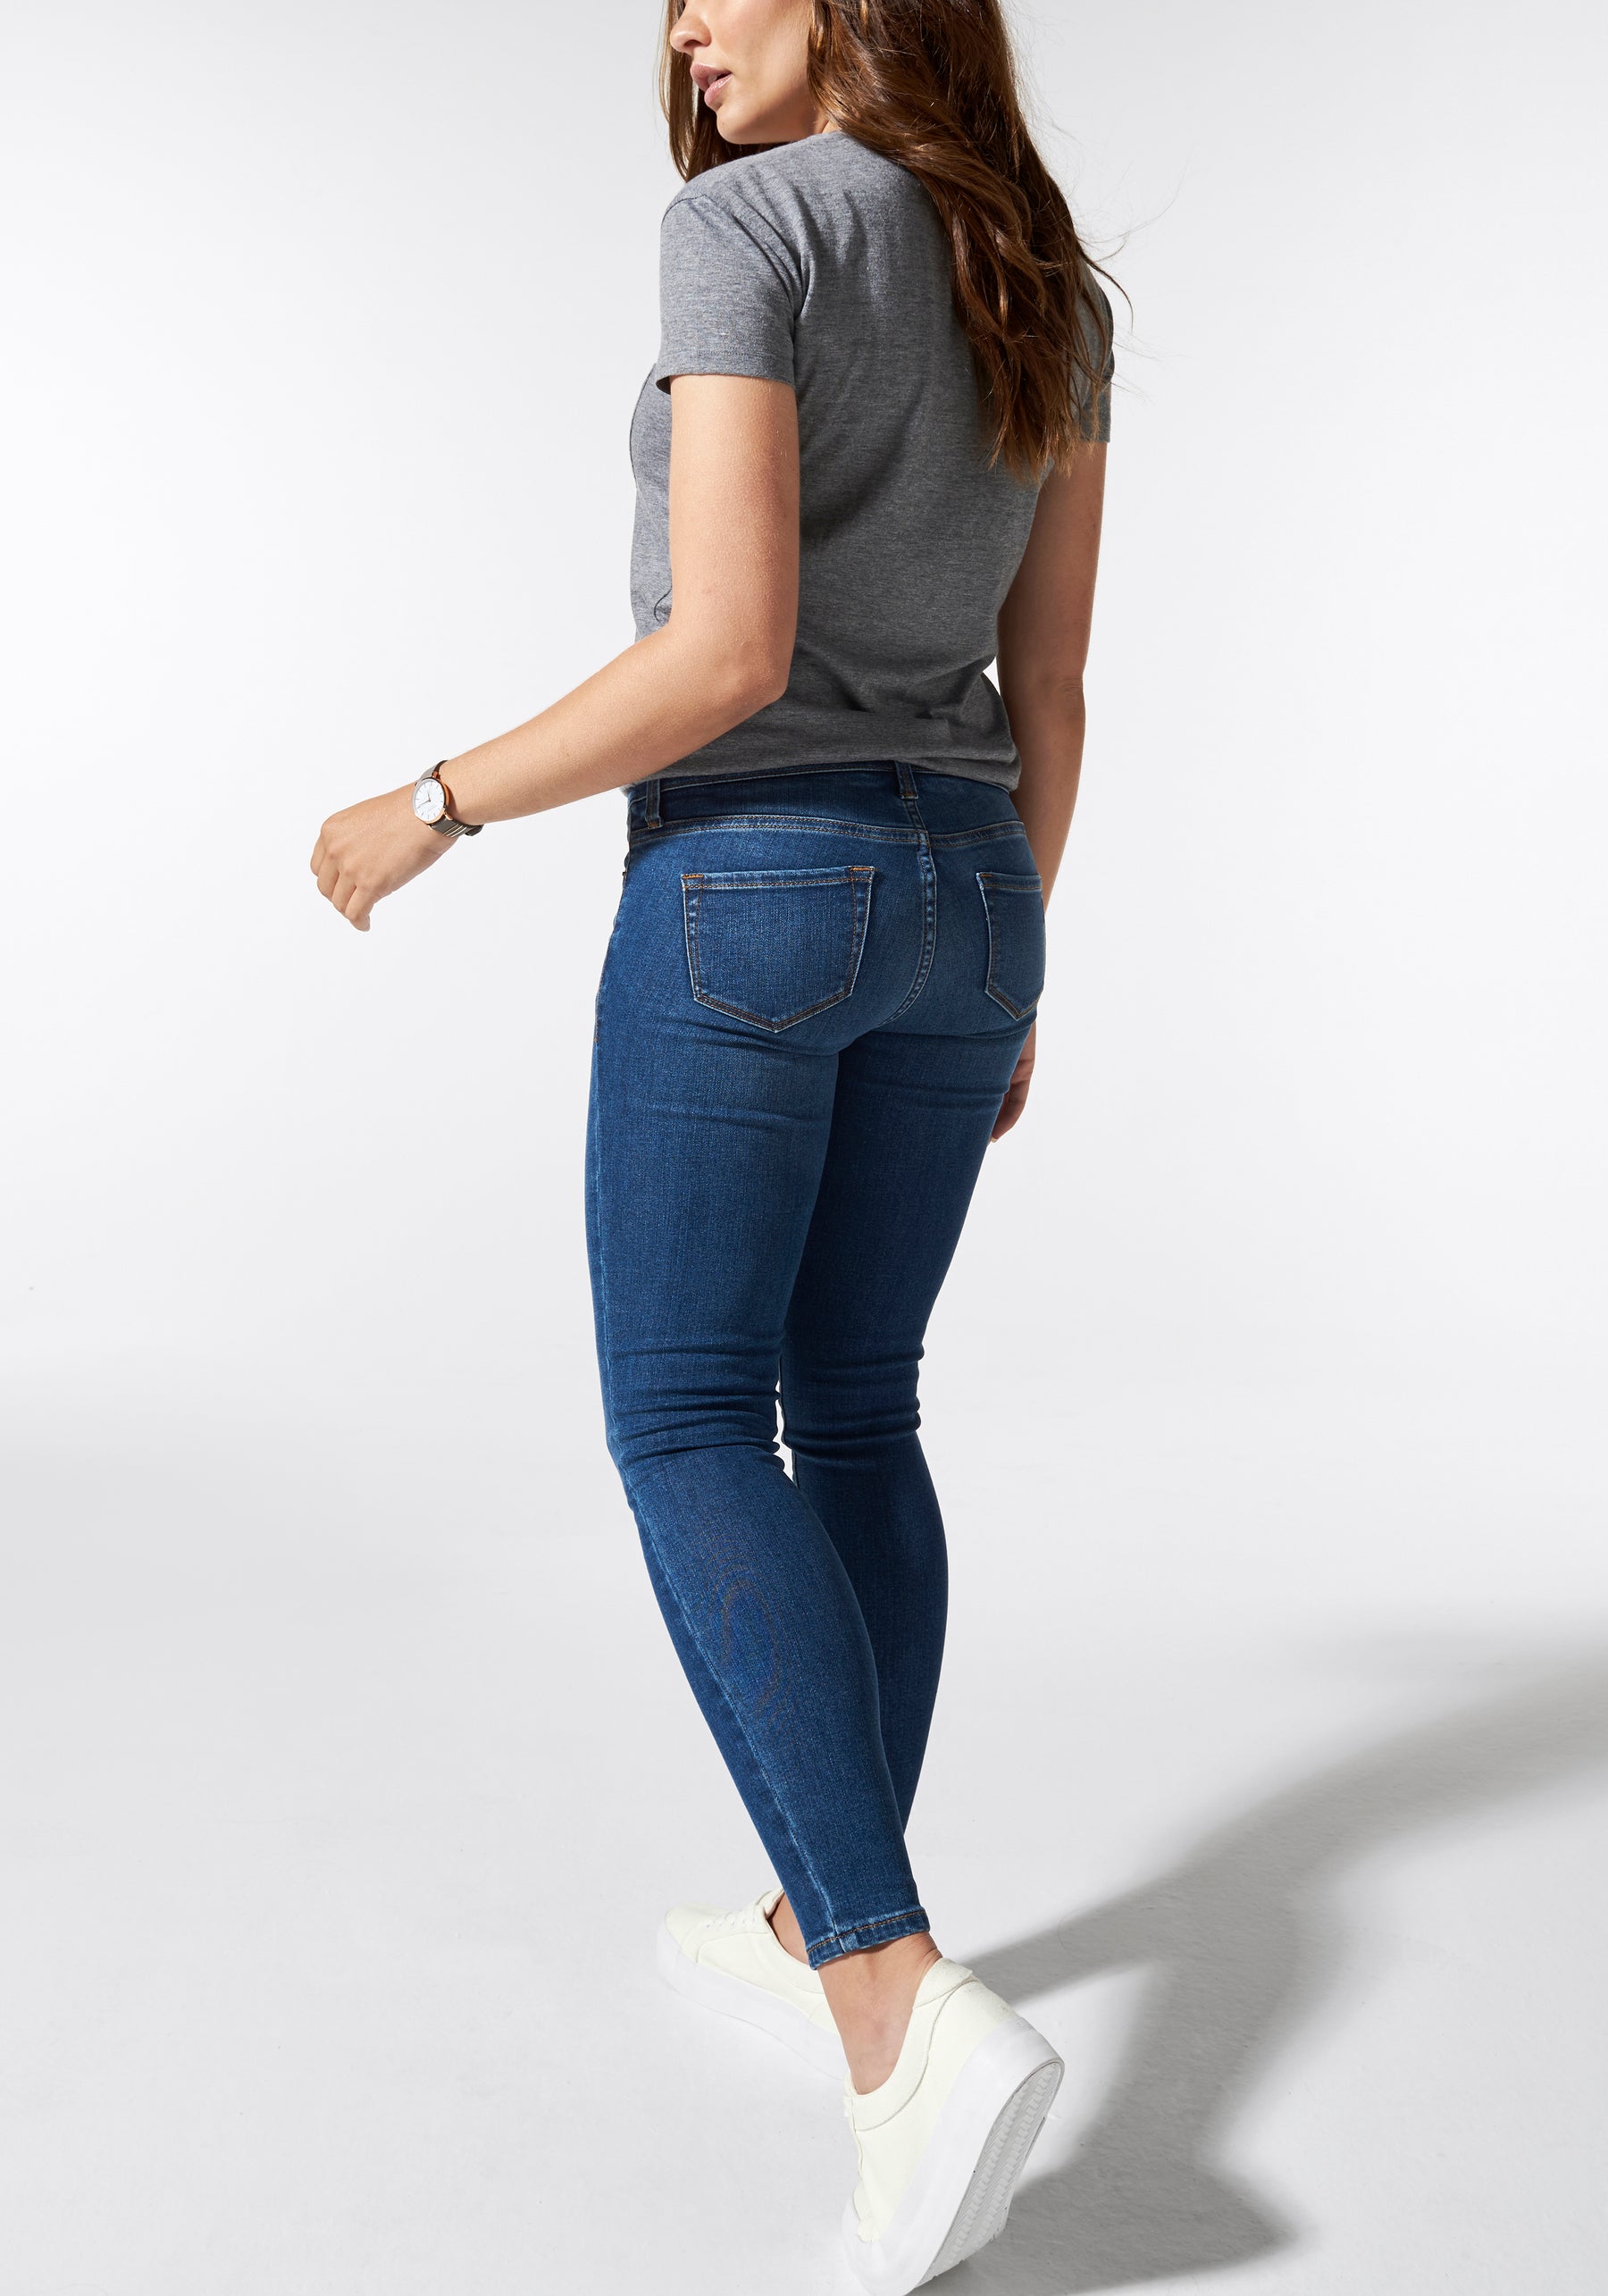 Post Pregnancy Stretch Jeans - Indigo – Peachymama